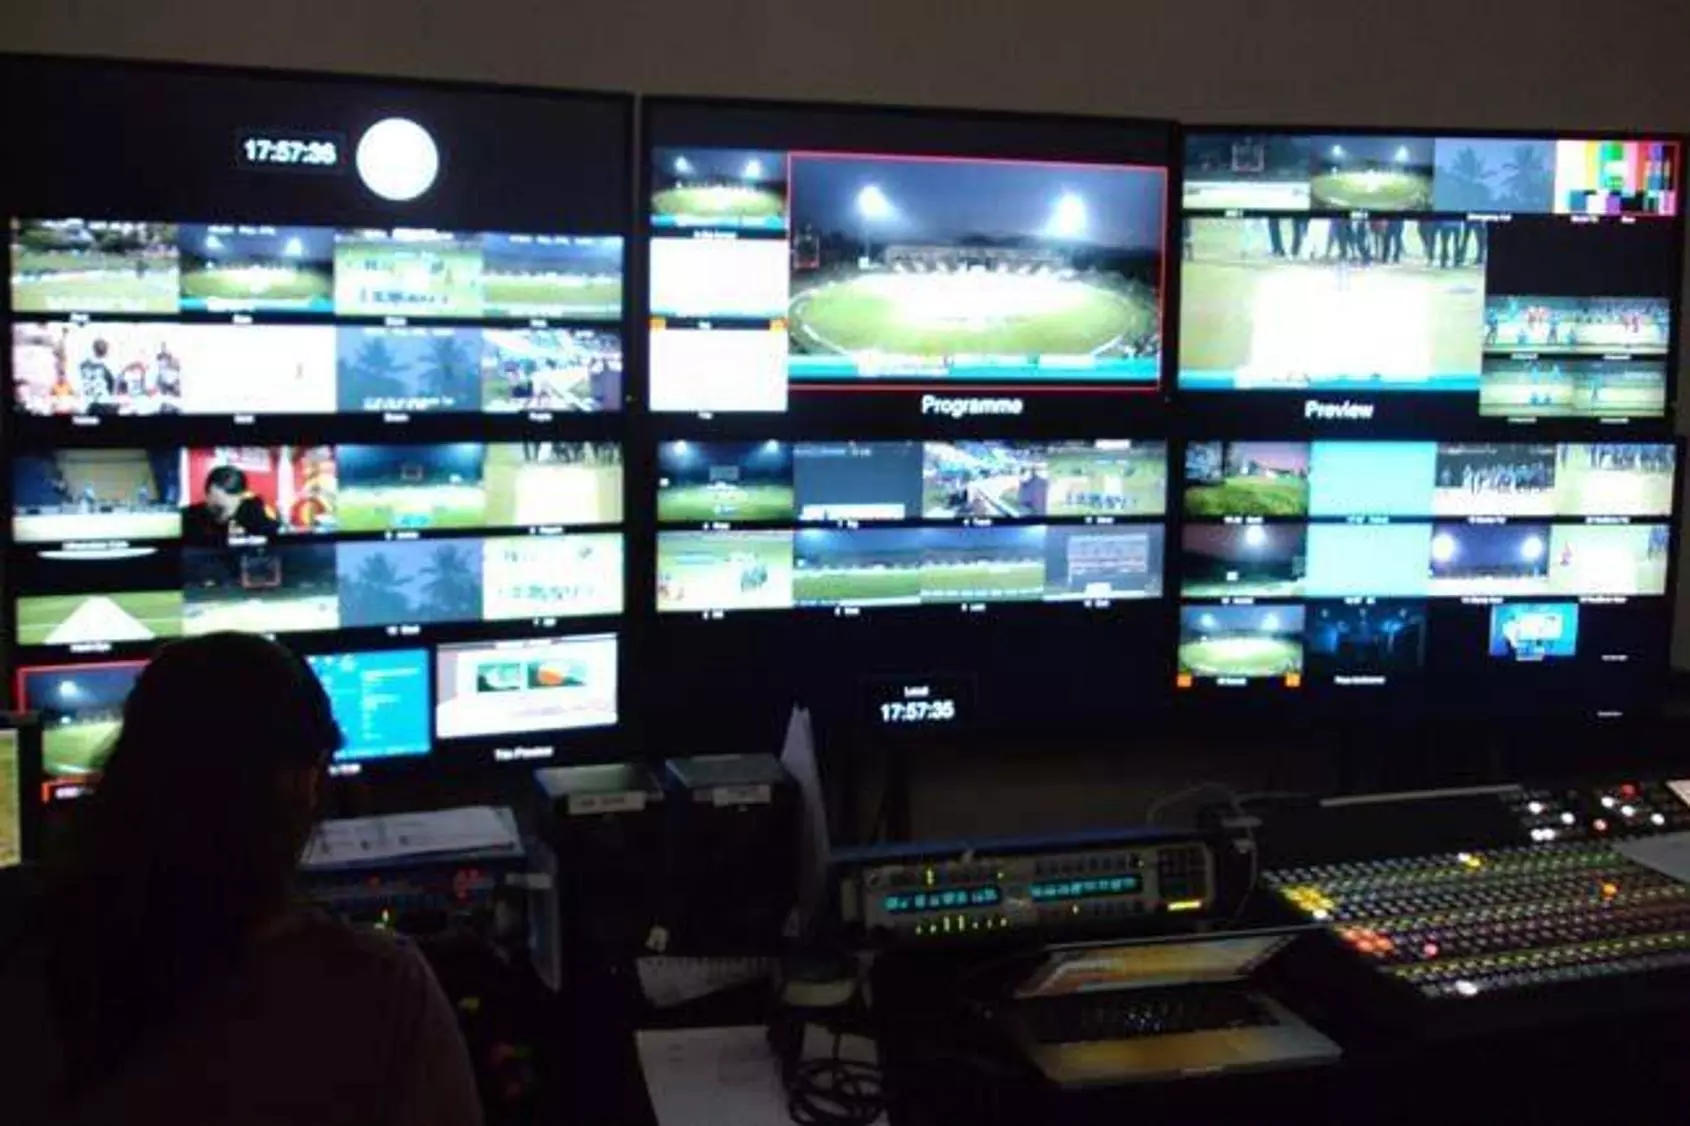 Cricket TV coverage, Live broadcast